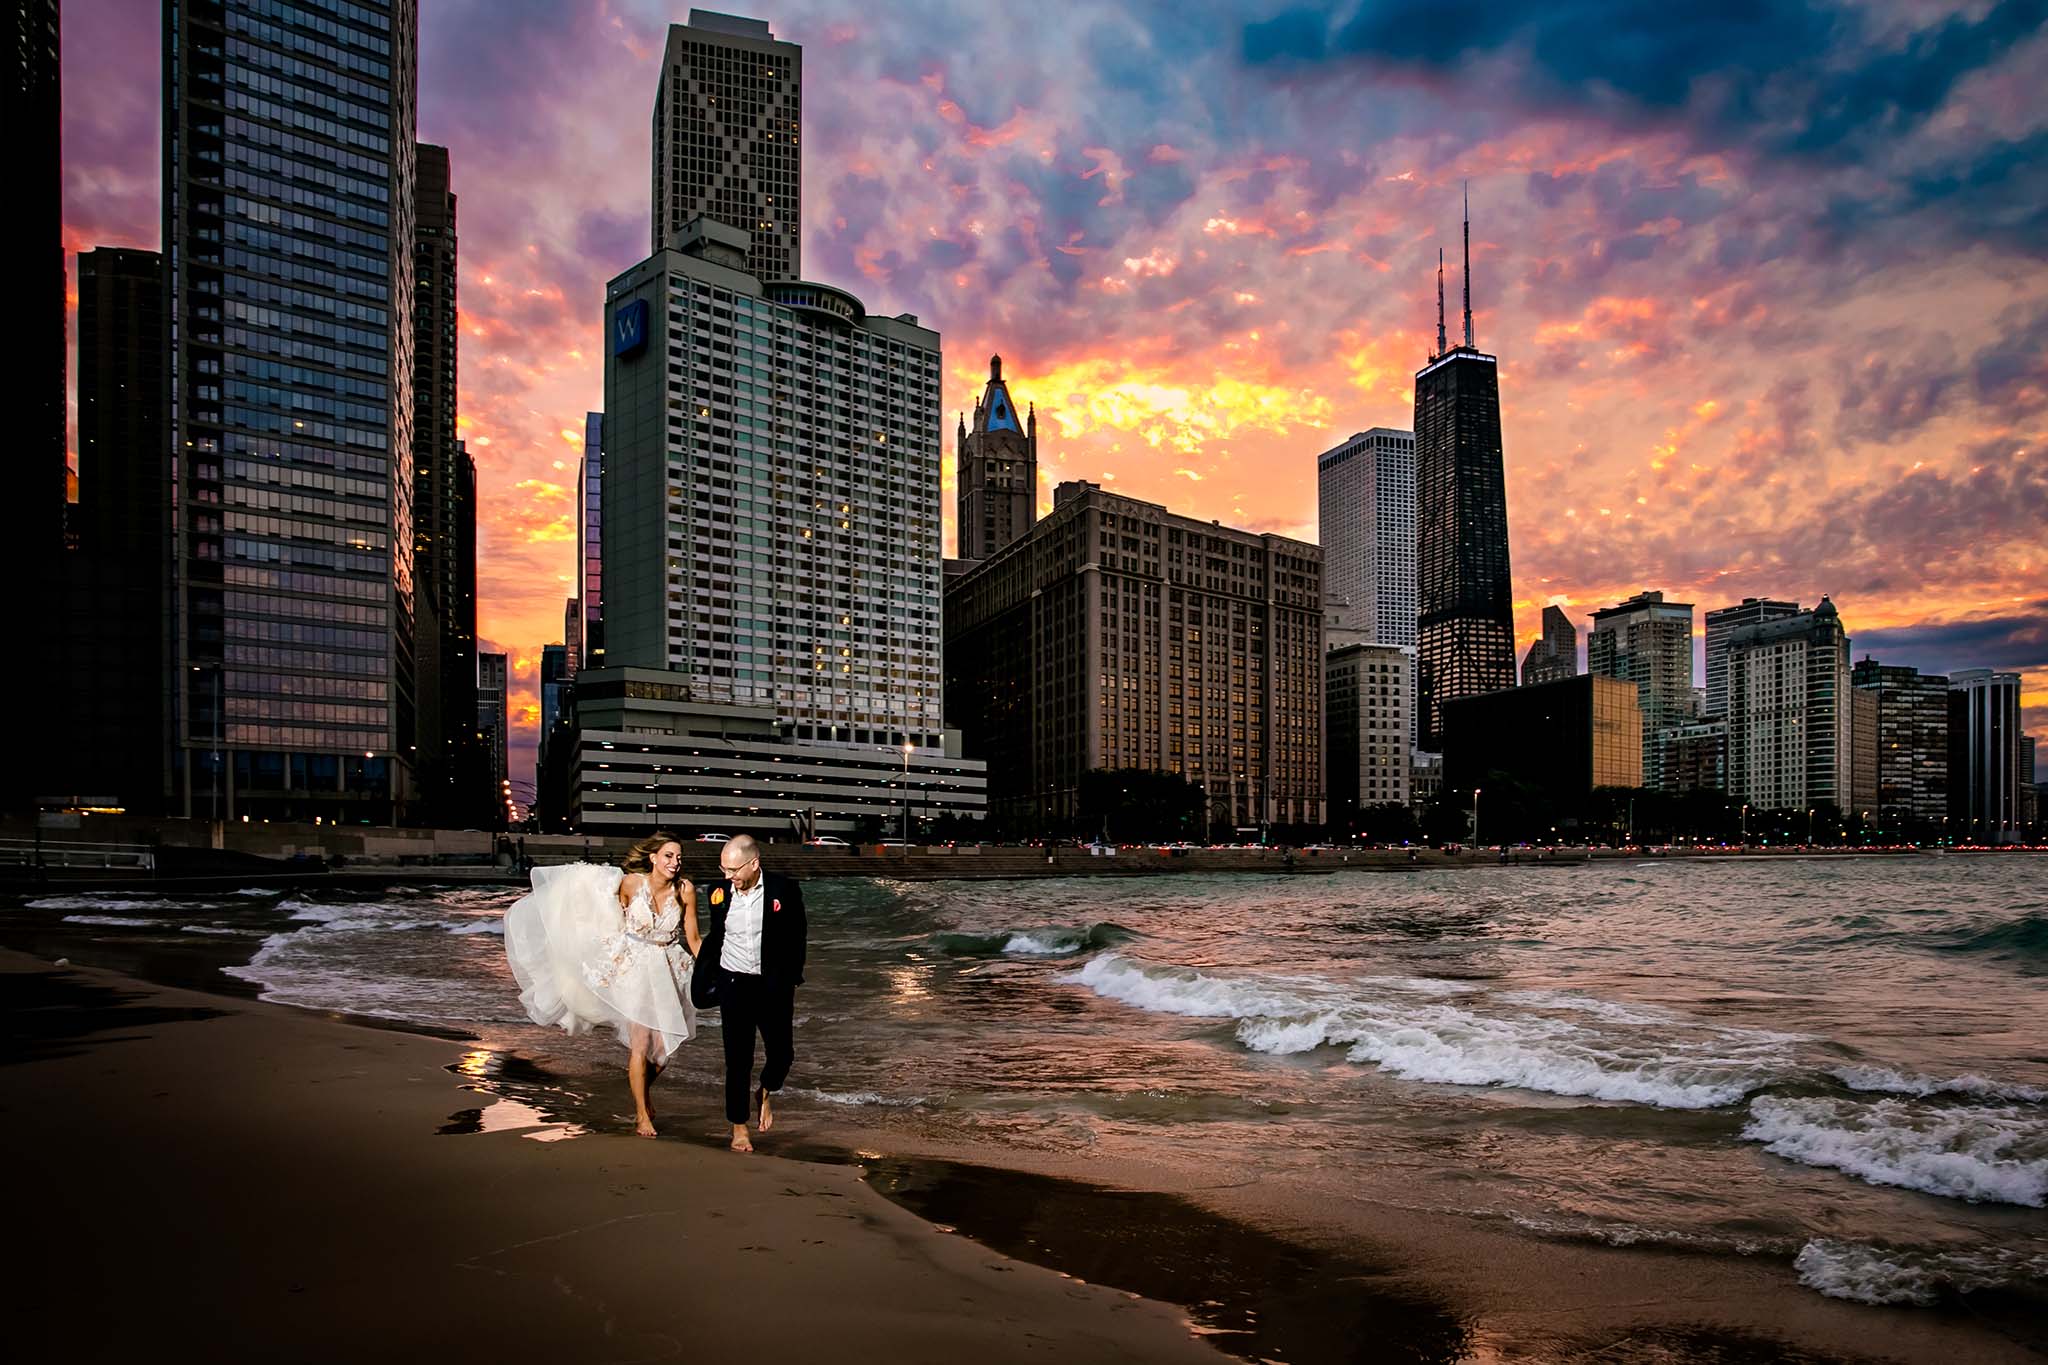 Jefferson Park wedding photographer - Chicago